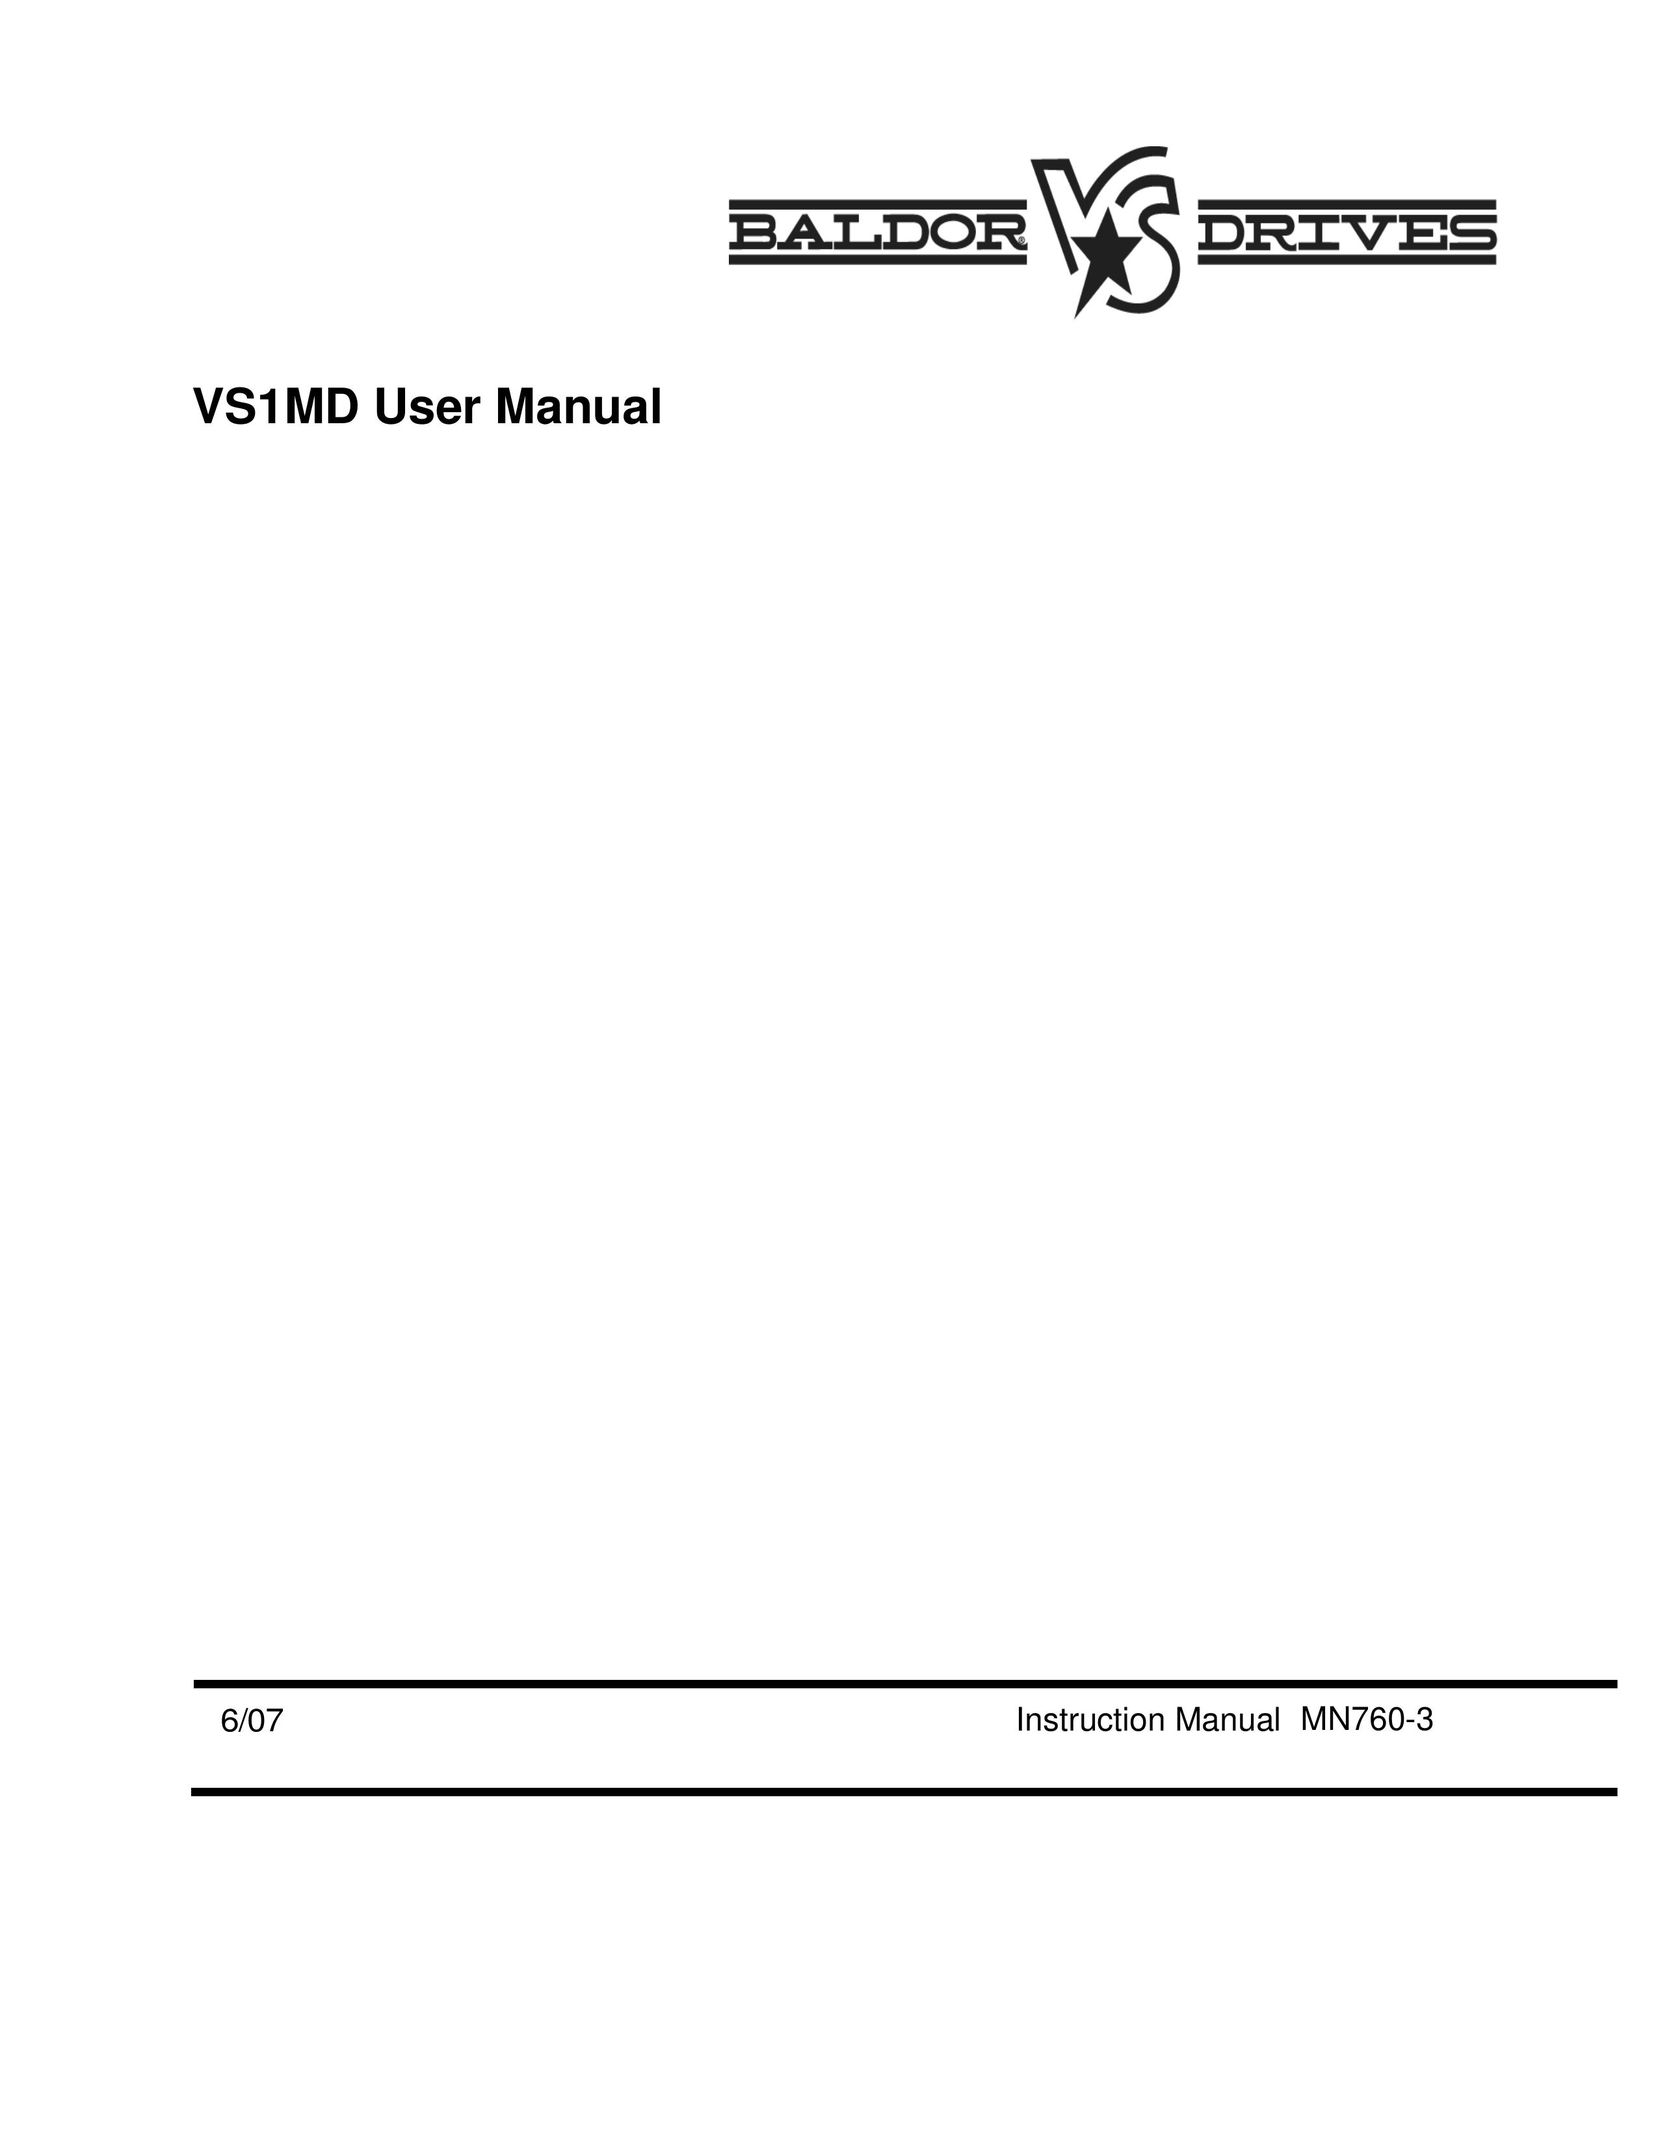 Baldor VS1MD Computer Drive User Manual